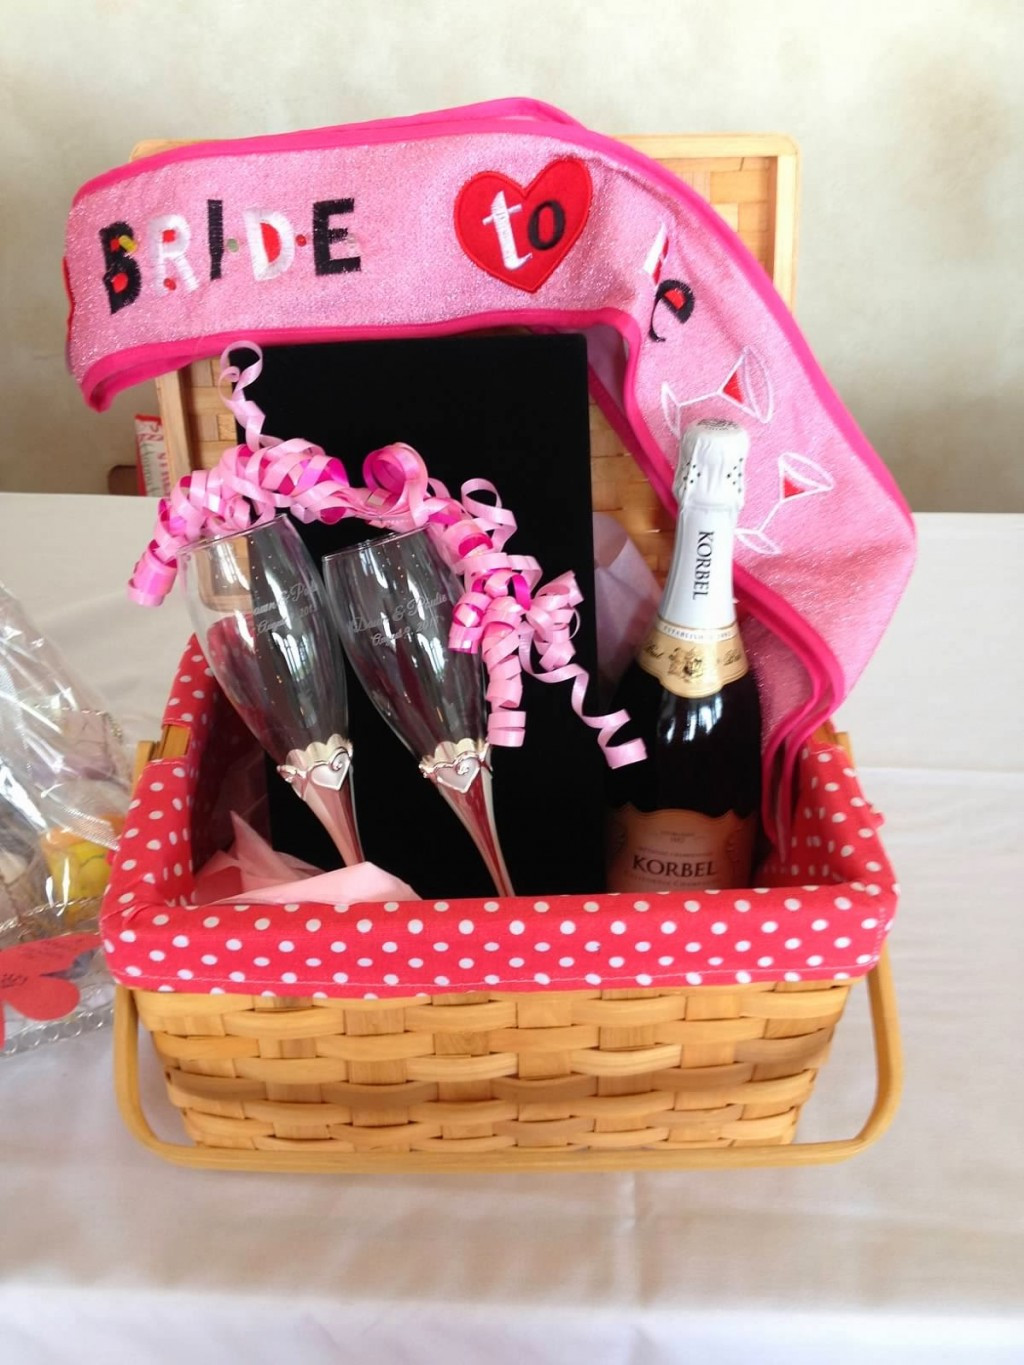 Bridal Shower Gift Basket Ideas For Guests
 Favors & Gifts Creative Wedding Shower Prizes Inspiration